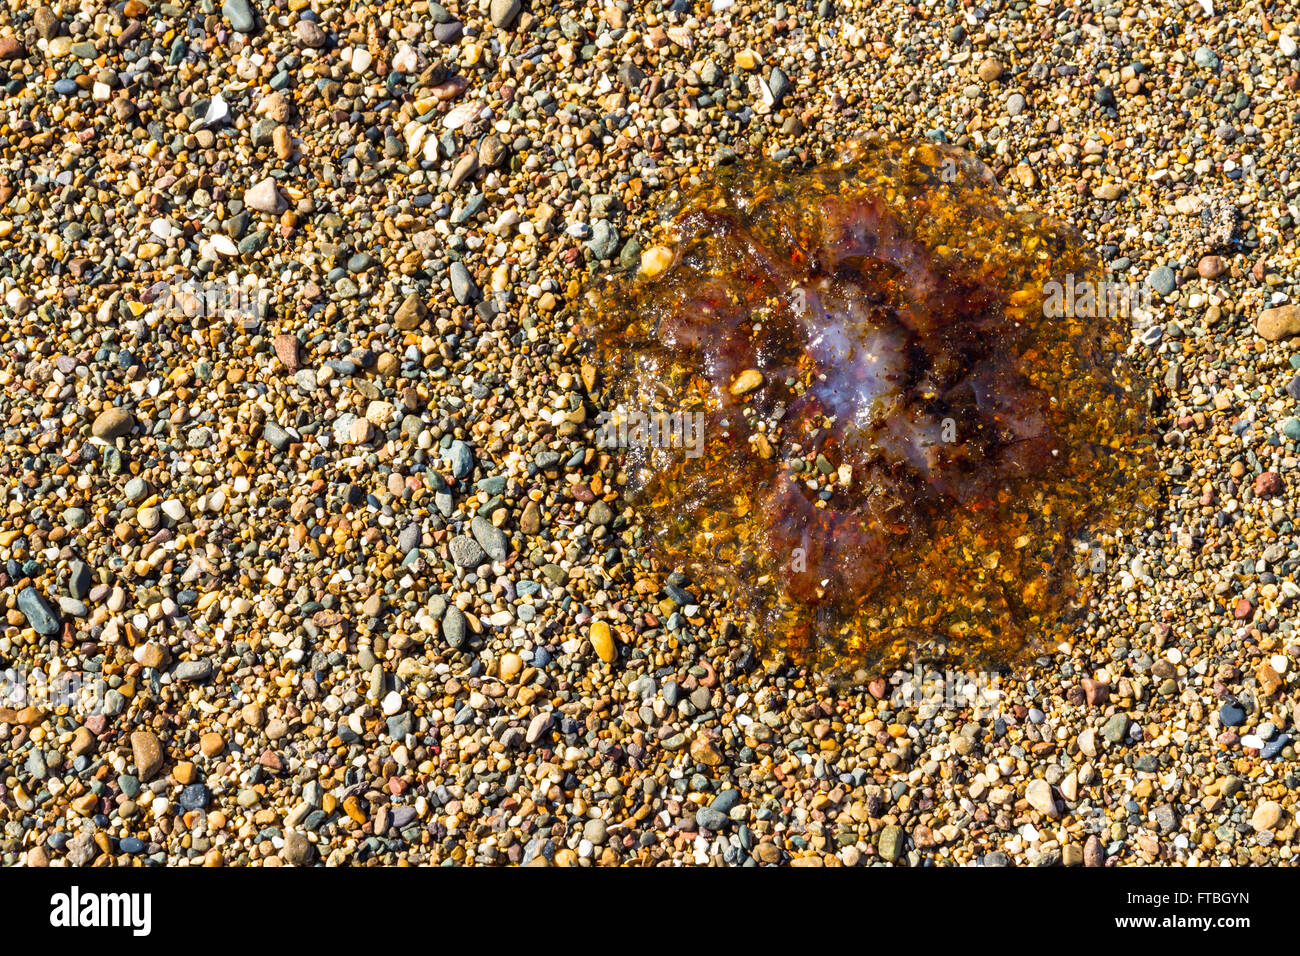 Quallen oder Jellie, Teil des Phylum Cnidaria angespült am Kiesstrand. Stockfoto